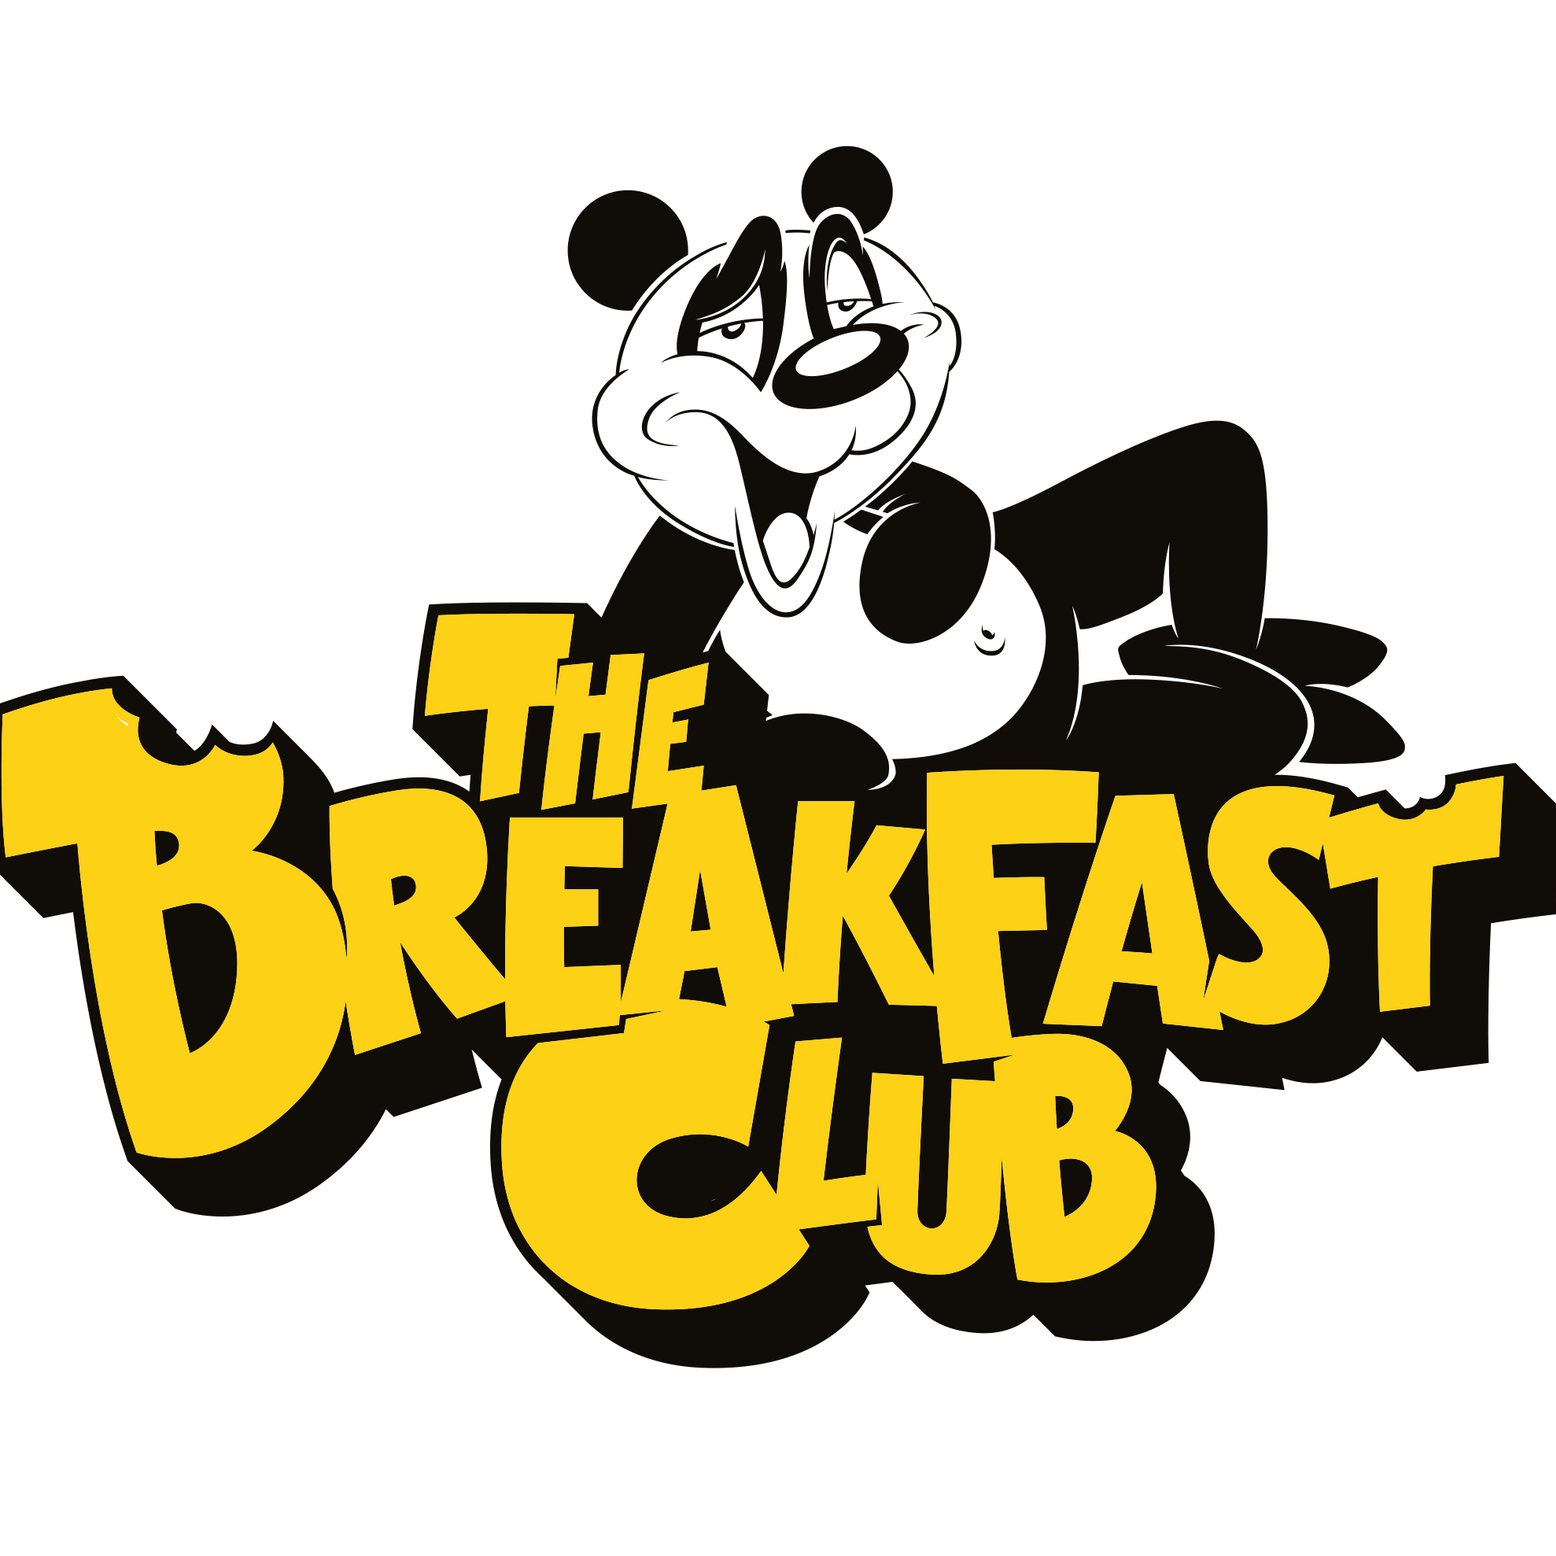 The Breakfast Club - Opening Soon Photo